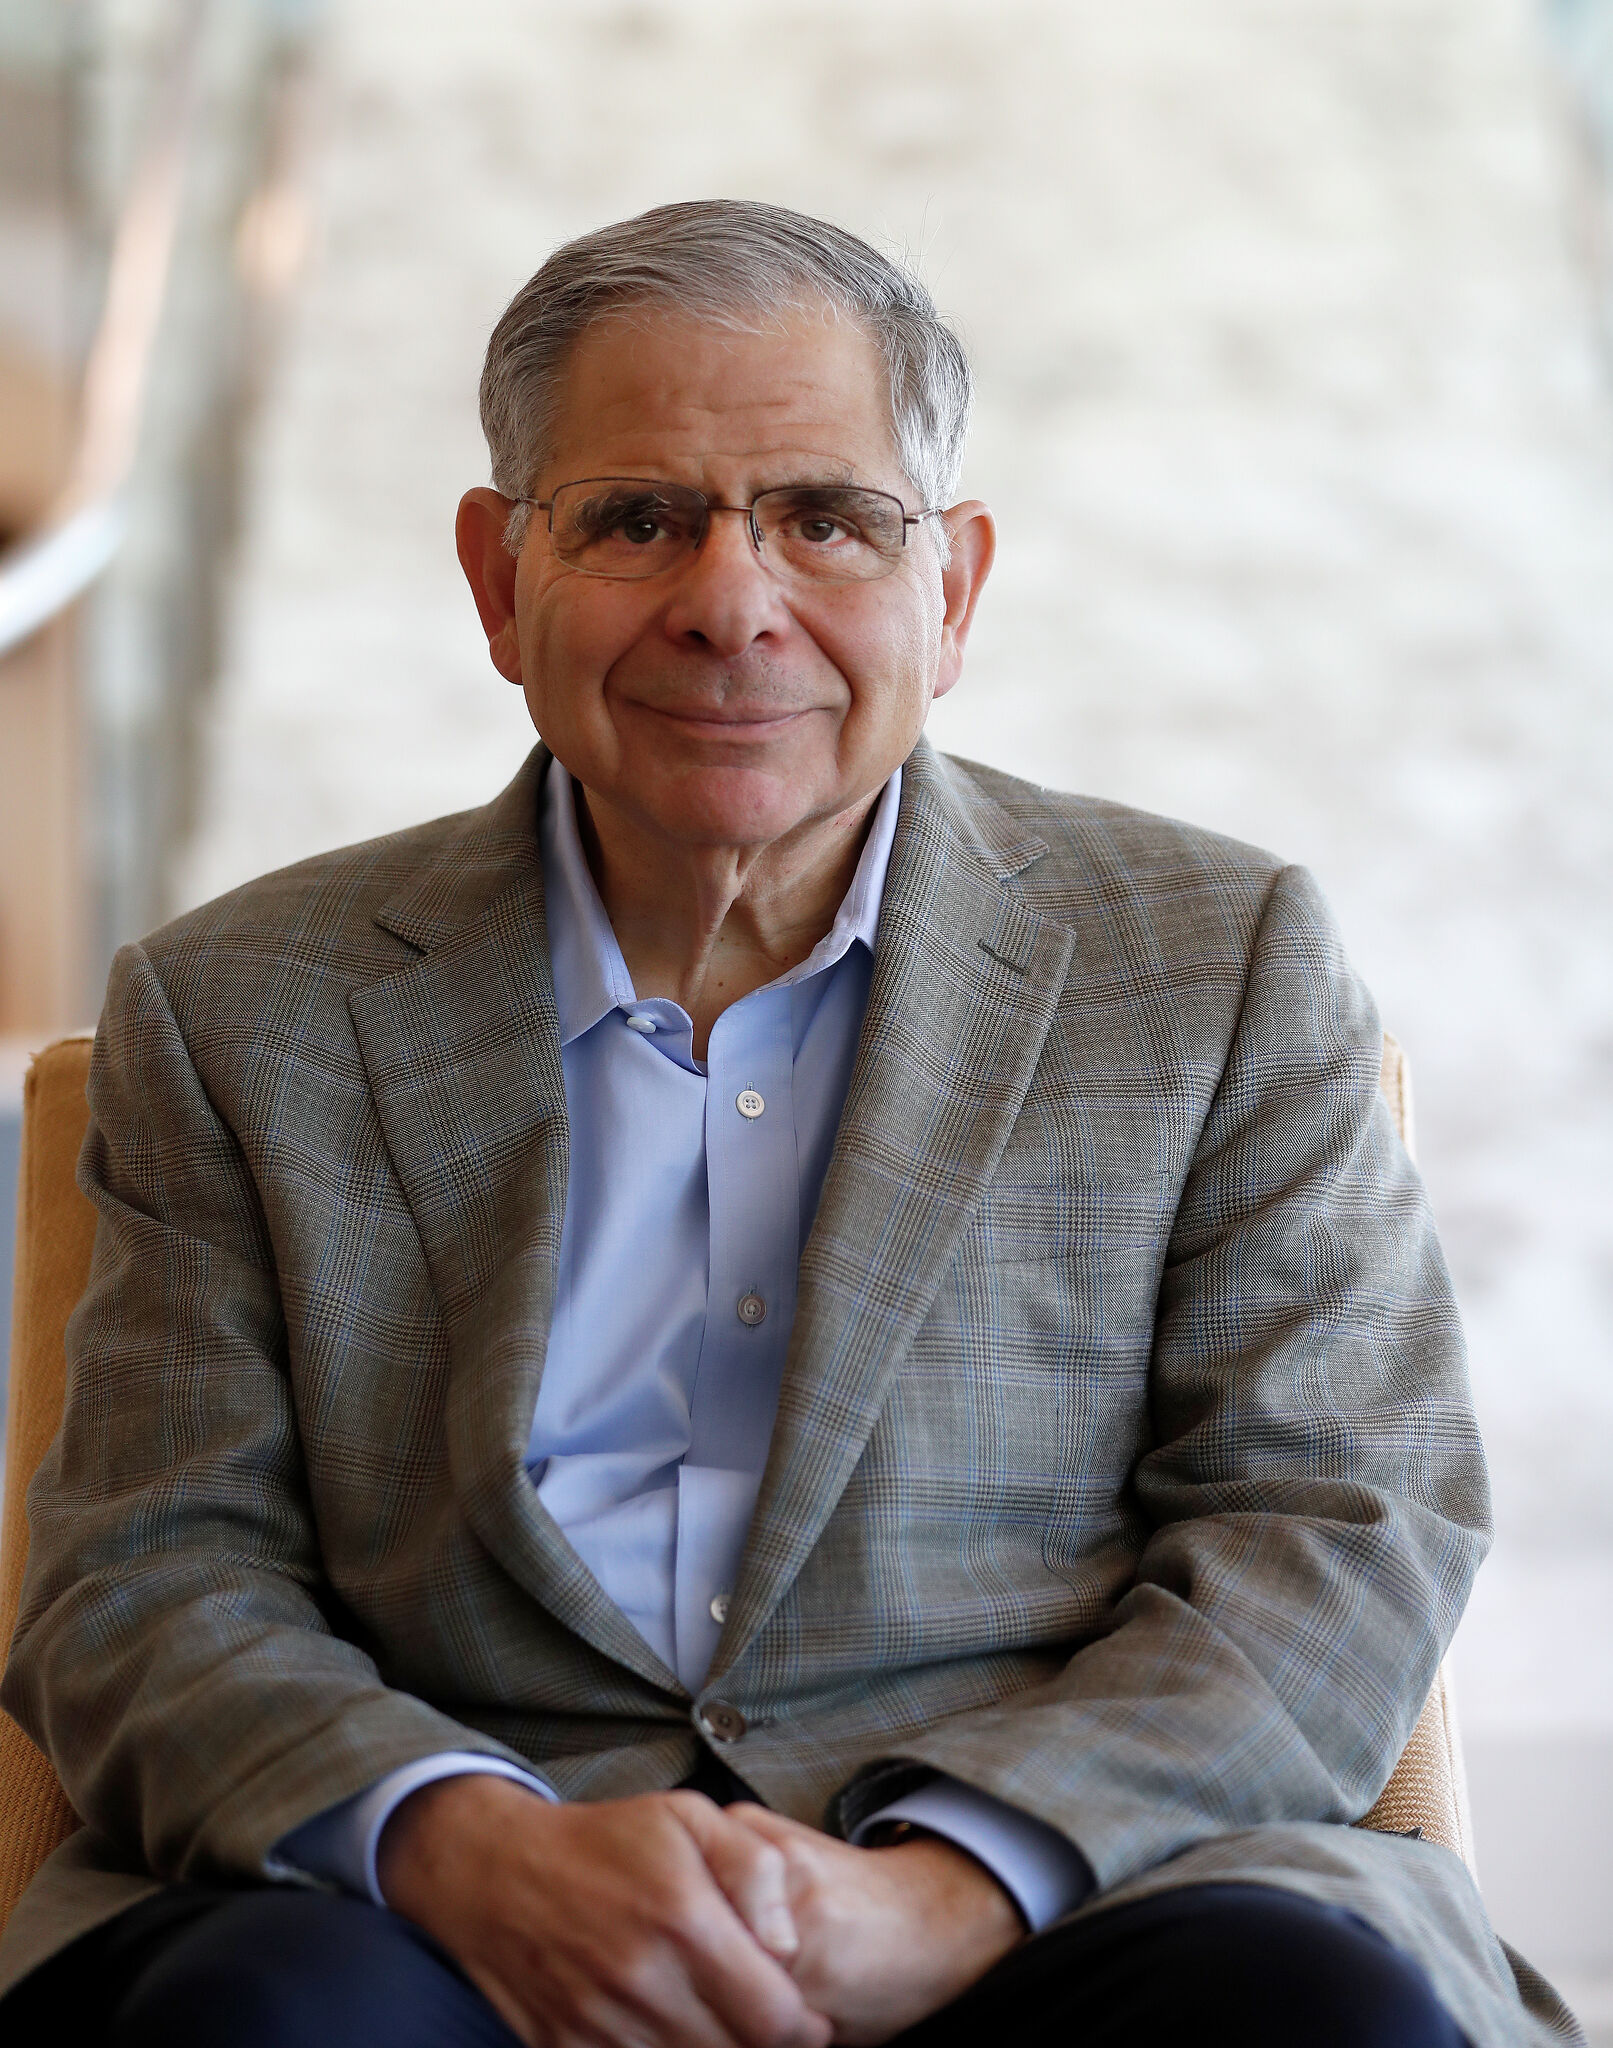 University of Houston Regent, oil executive Steve Chazen dies at 76